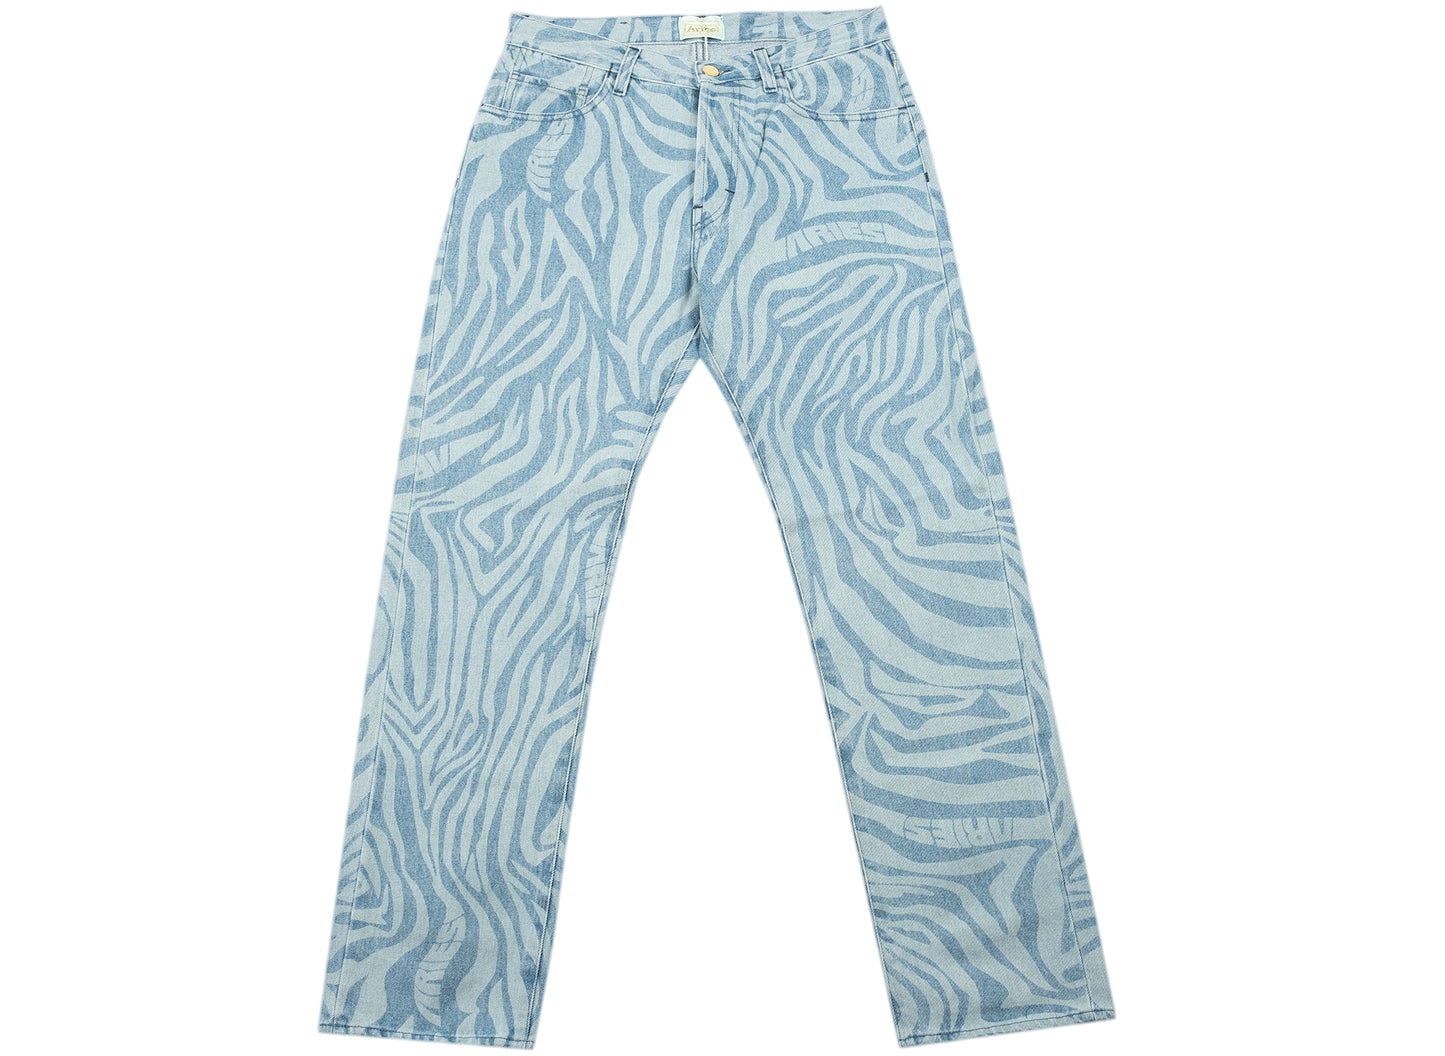 Aries Zebra Print Lilly Jeans